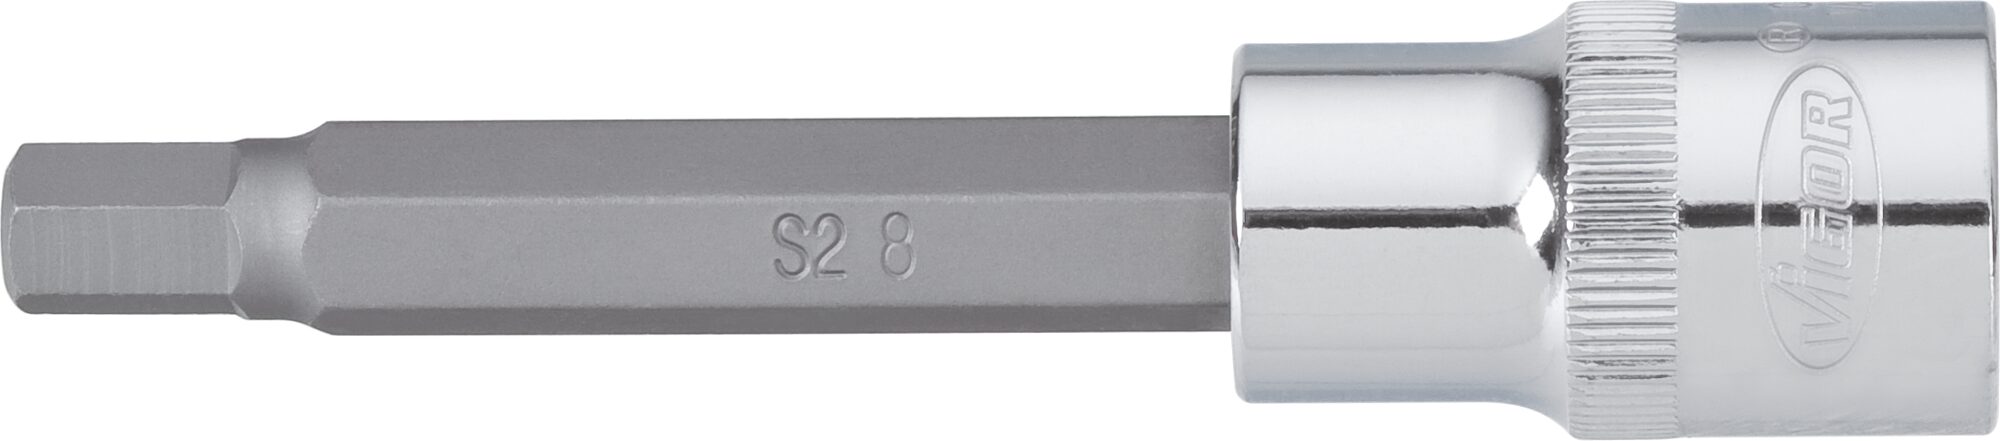 VIGOR Innensechskant Schraubendreher-Einsatz · V2072 · Vierkant hohl 12,5 mm (1/2 Zoll) · Innen Sechskant Profil · 5 mm